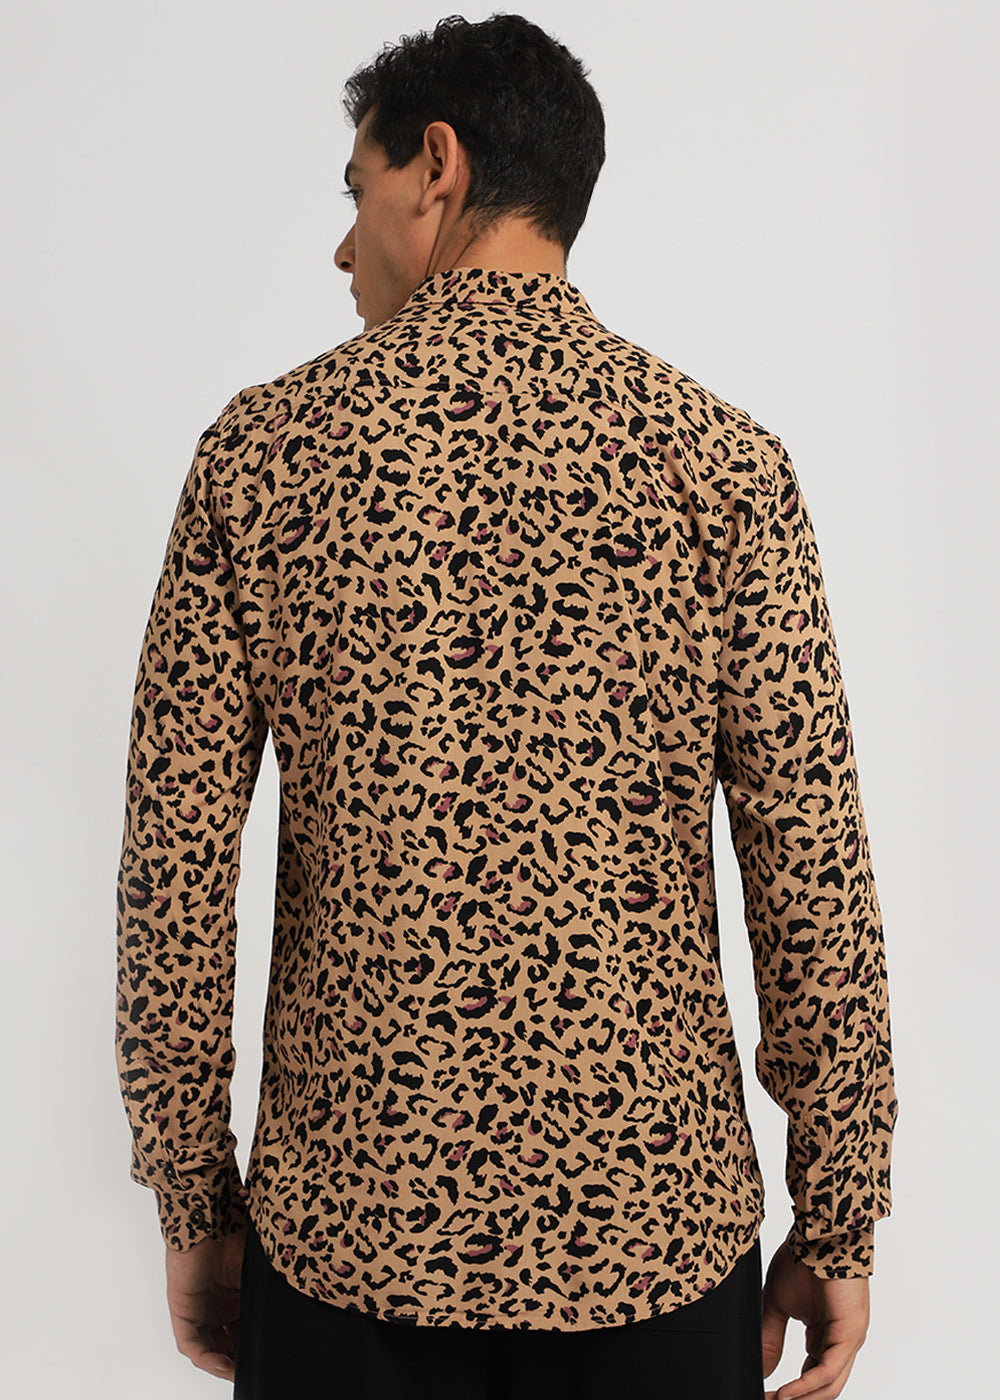 Animalistic Print Full sleeve shirt